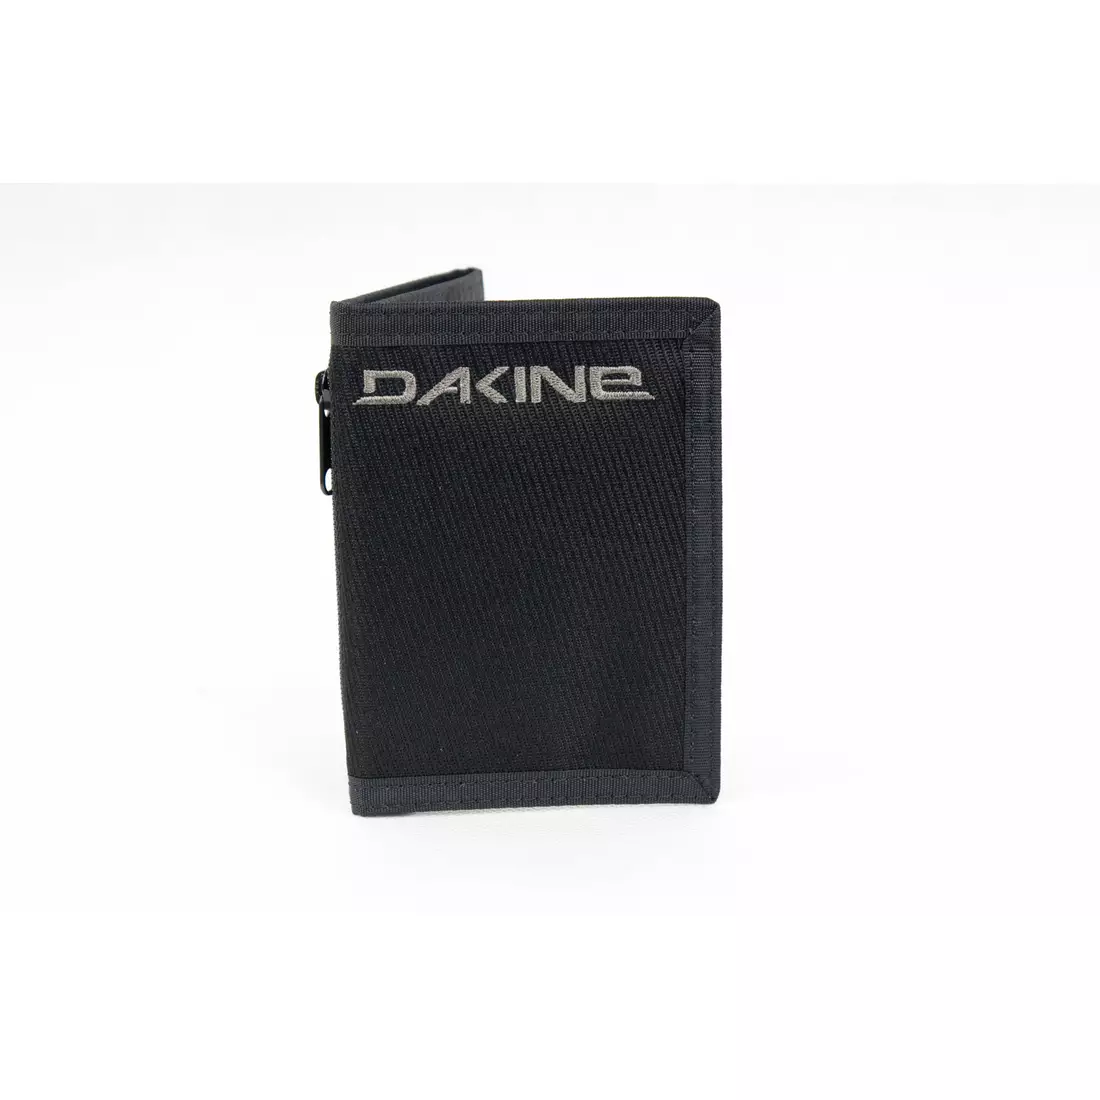 DAKINE wallet 8820206 VERT RAIL WALLET 0019 BLACK